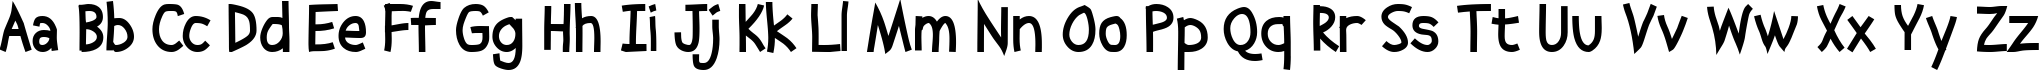 Пример написания английского алфавита шрифтом Abscissa Bold